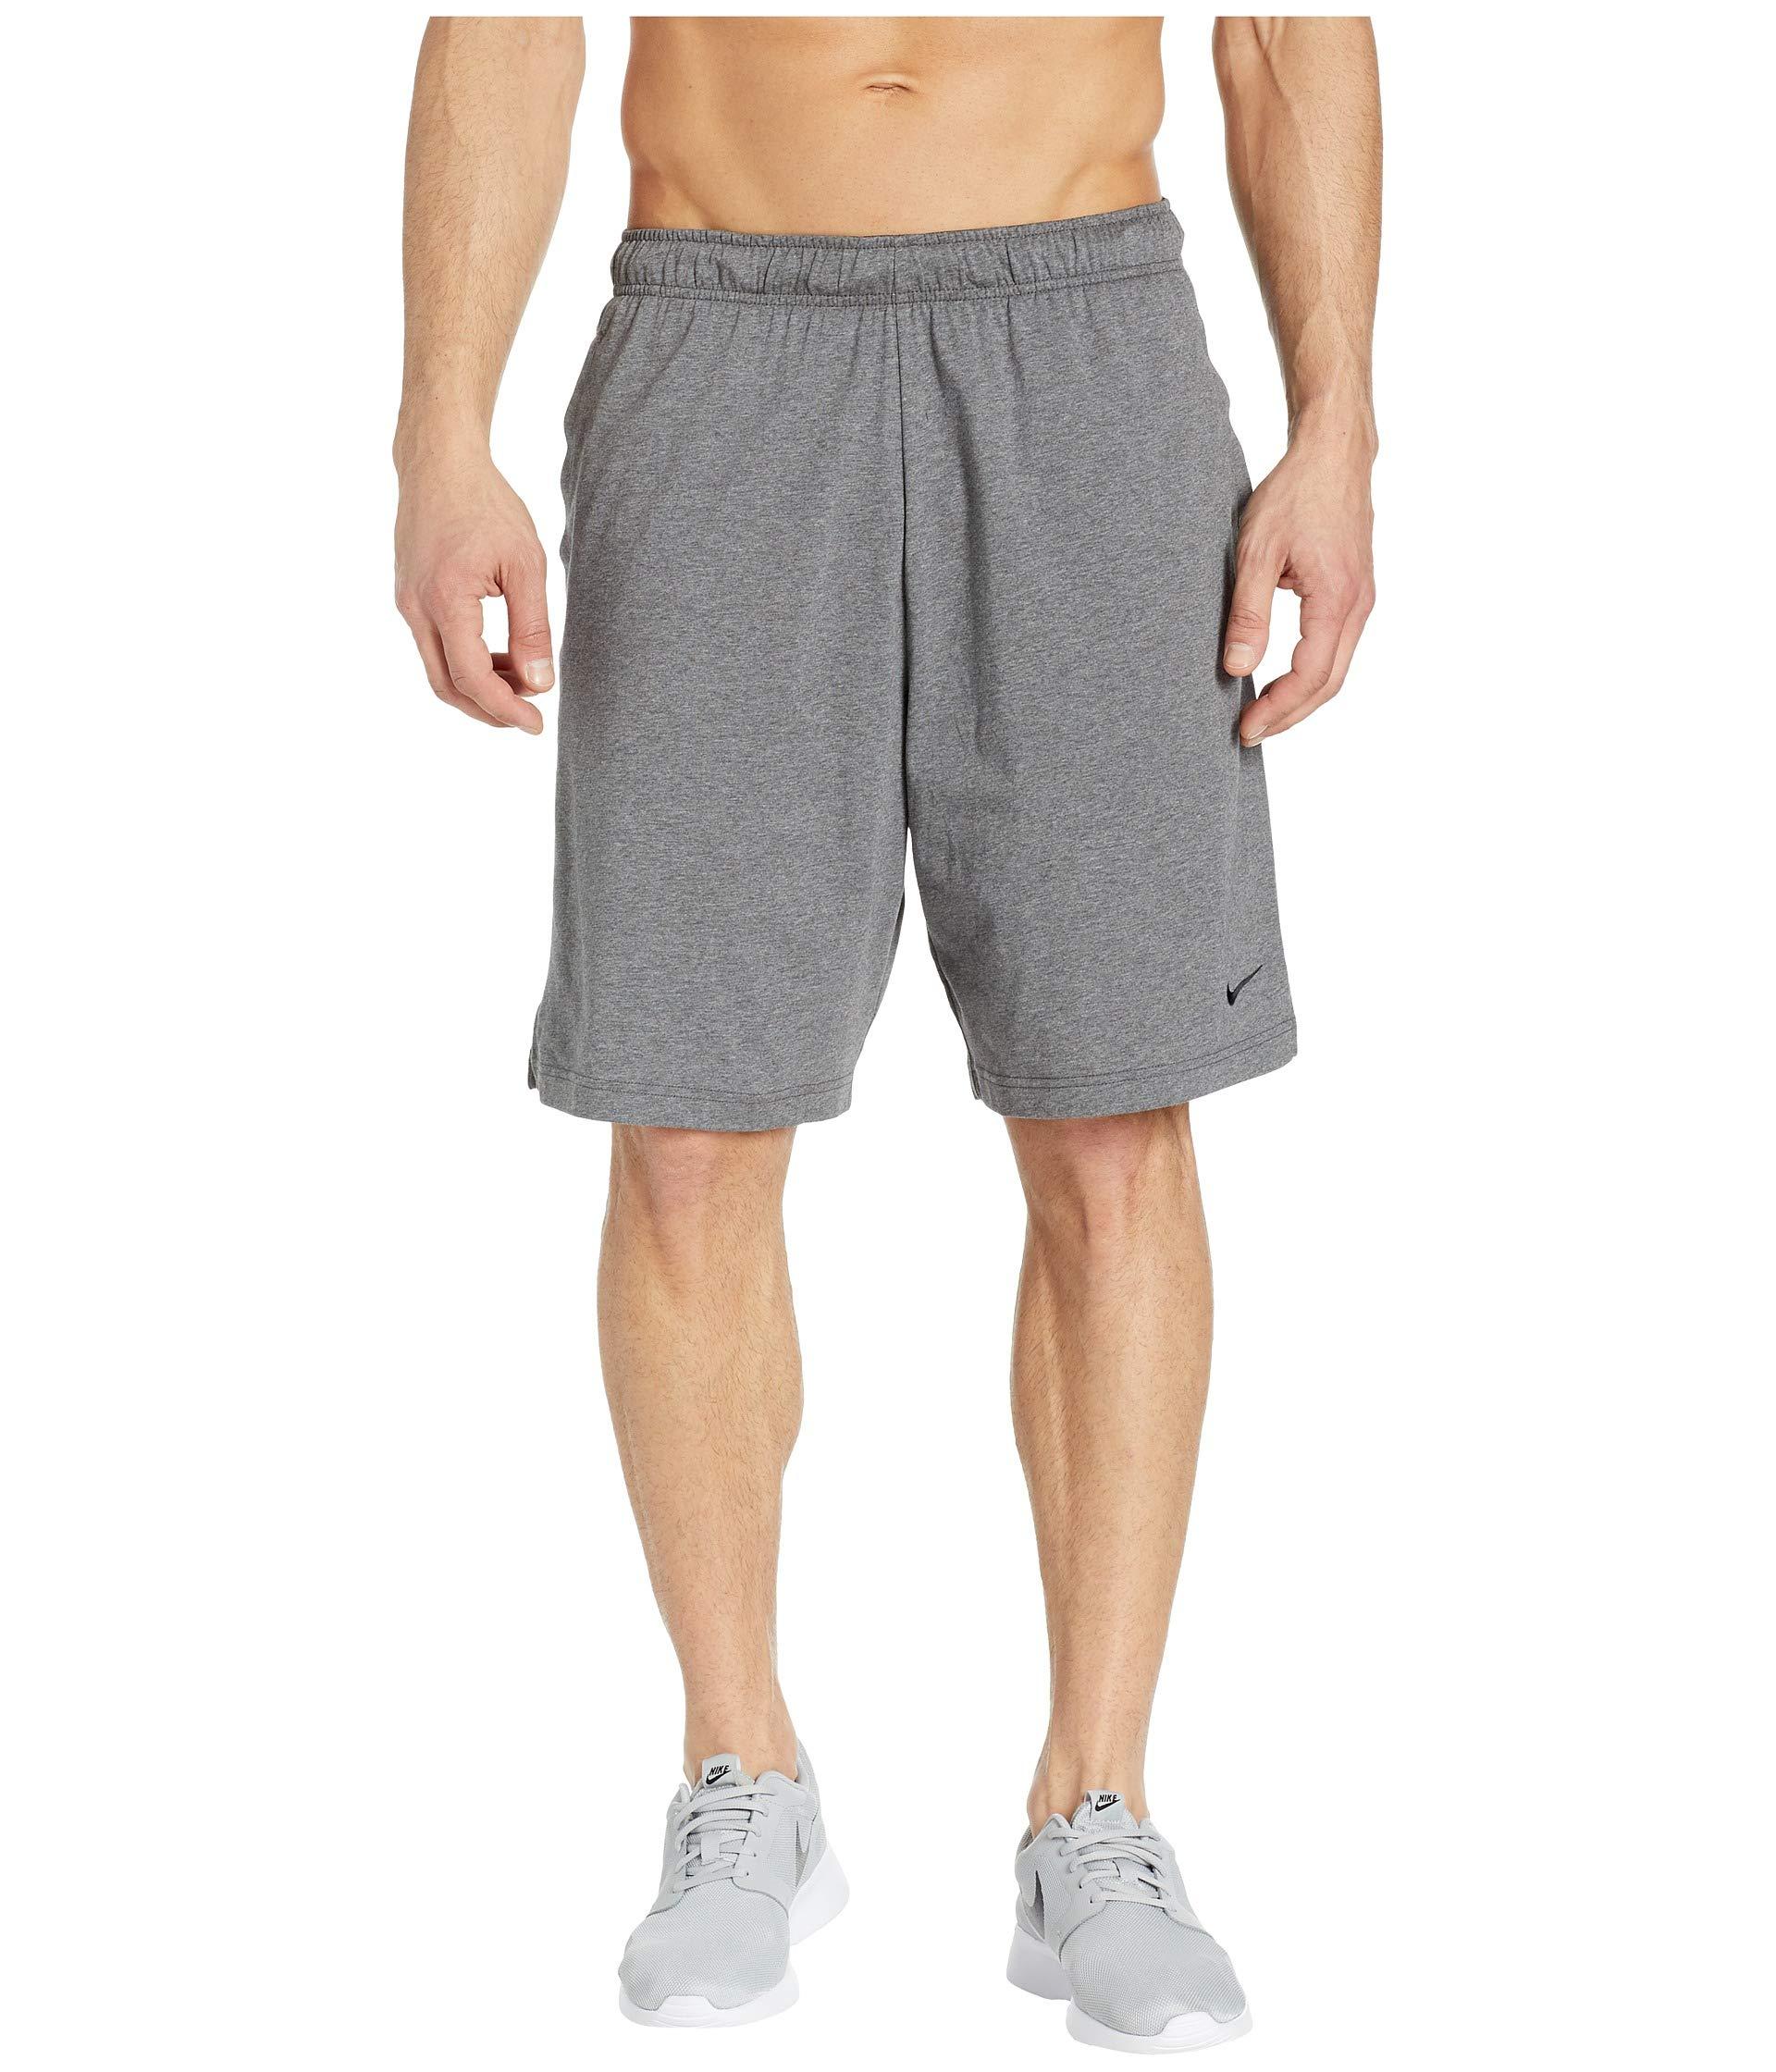 Nike Cotton Training Short in Gray for Men - Lyst